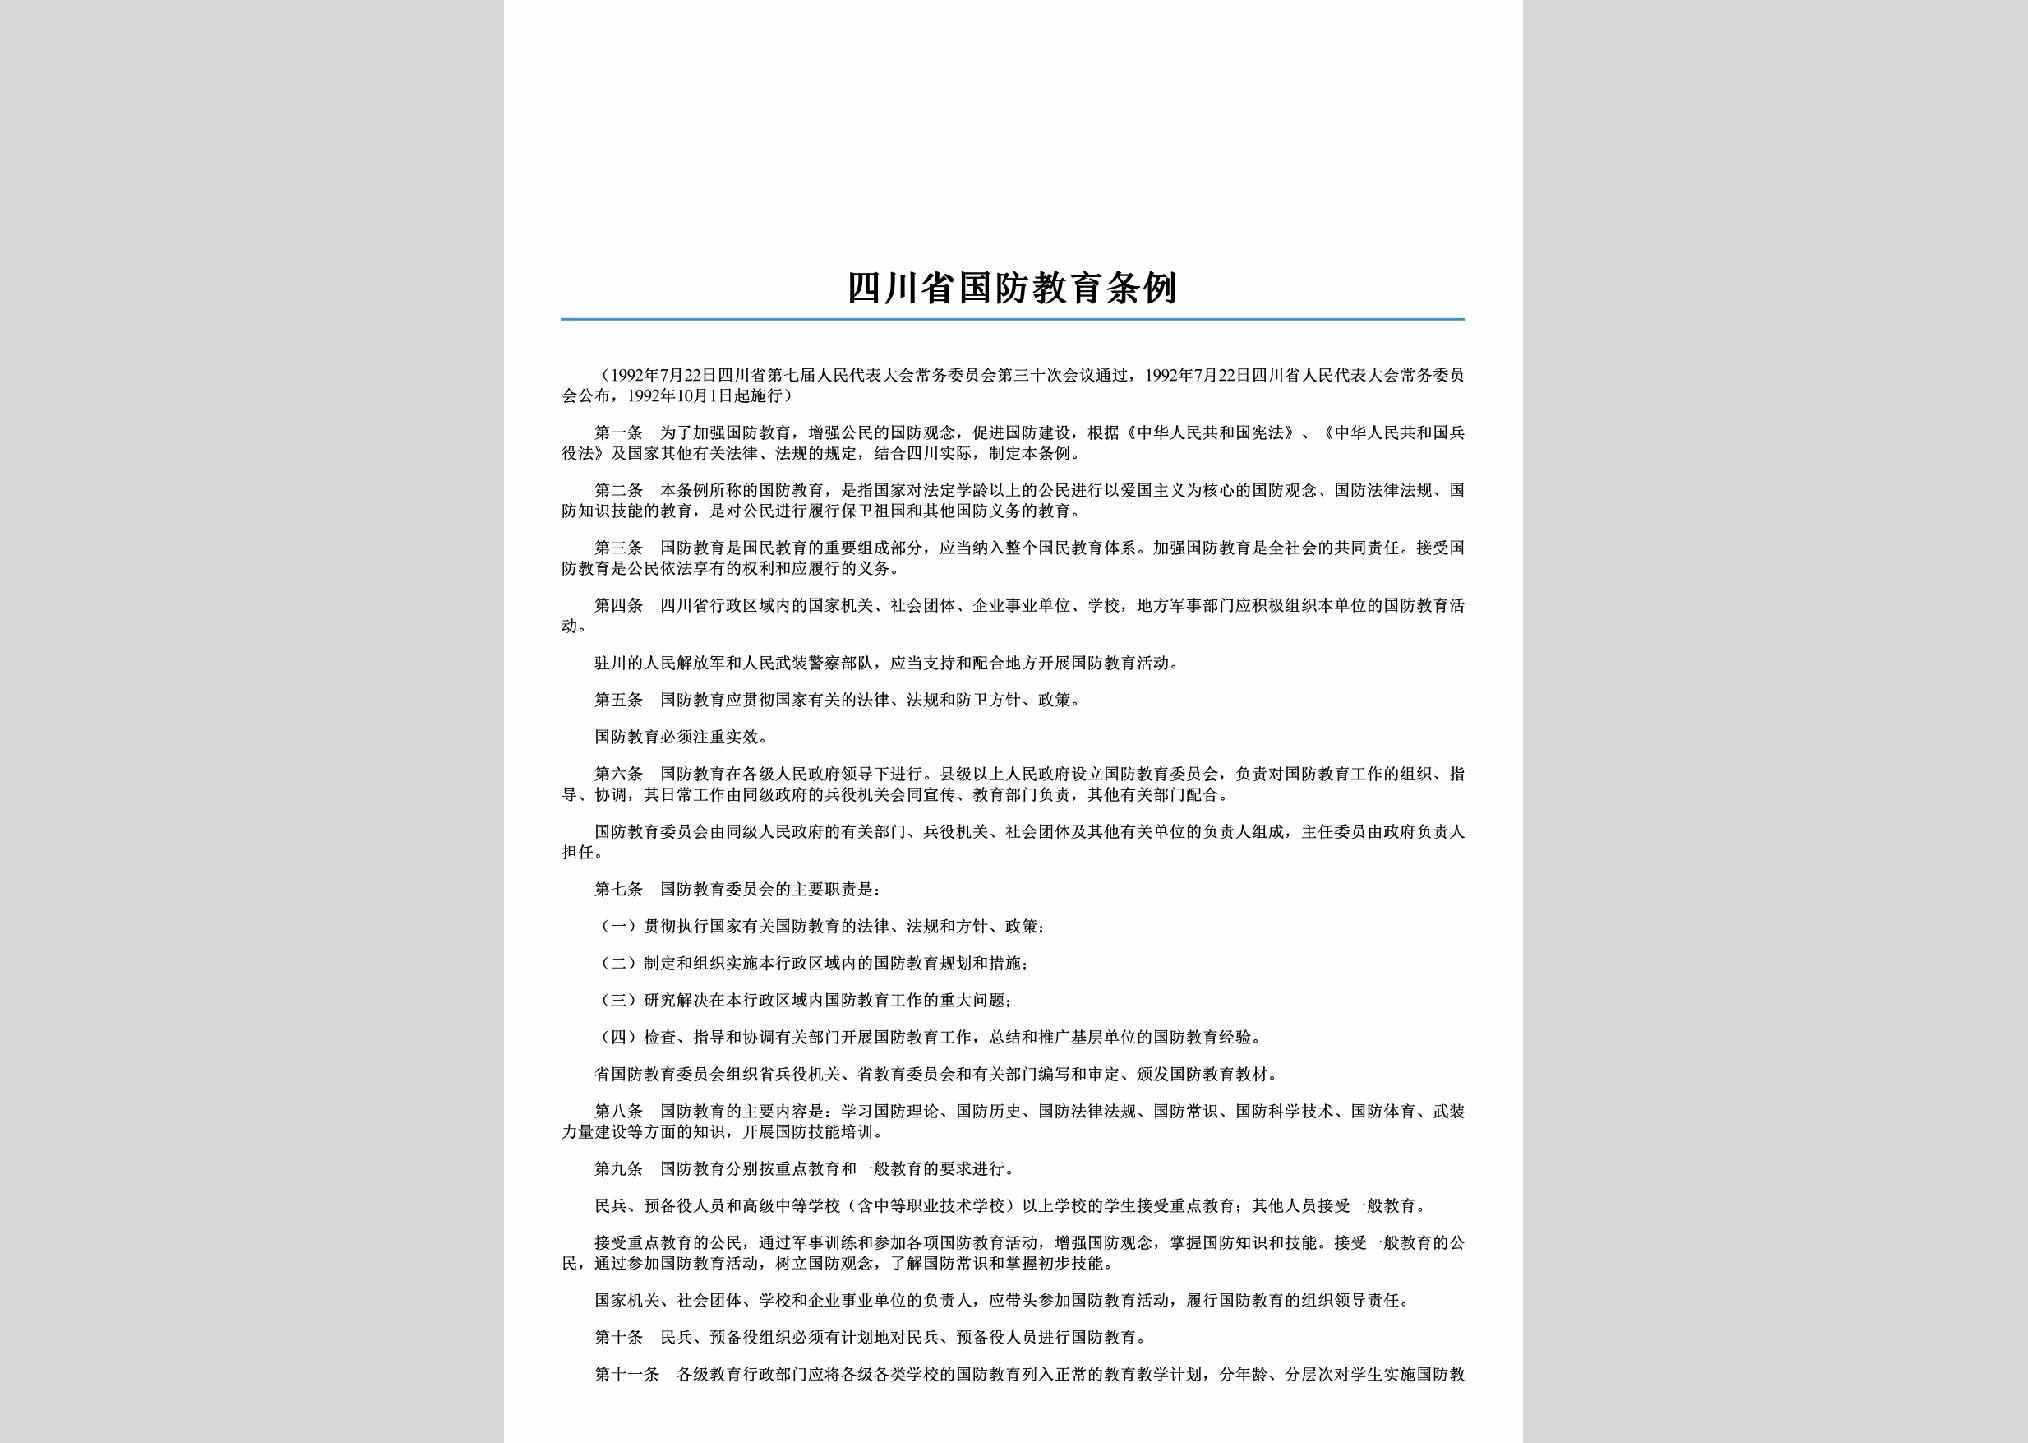 SC-GFJYTL-1992：四川省国防教育条例